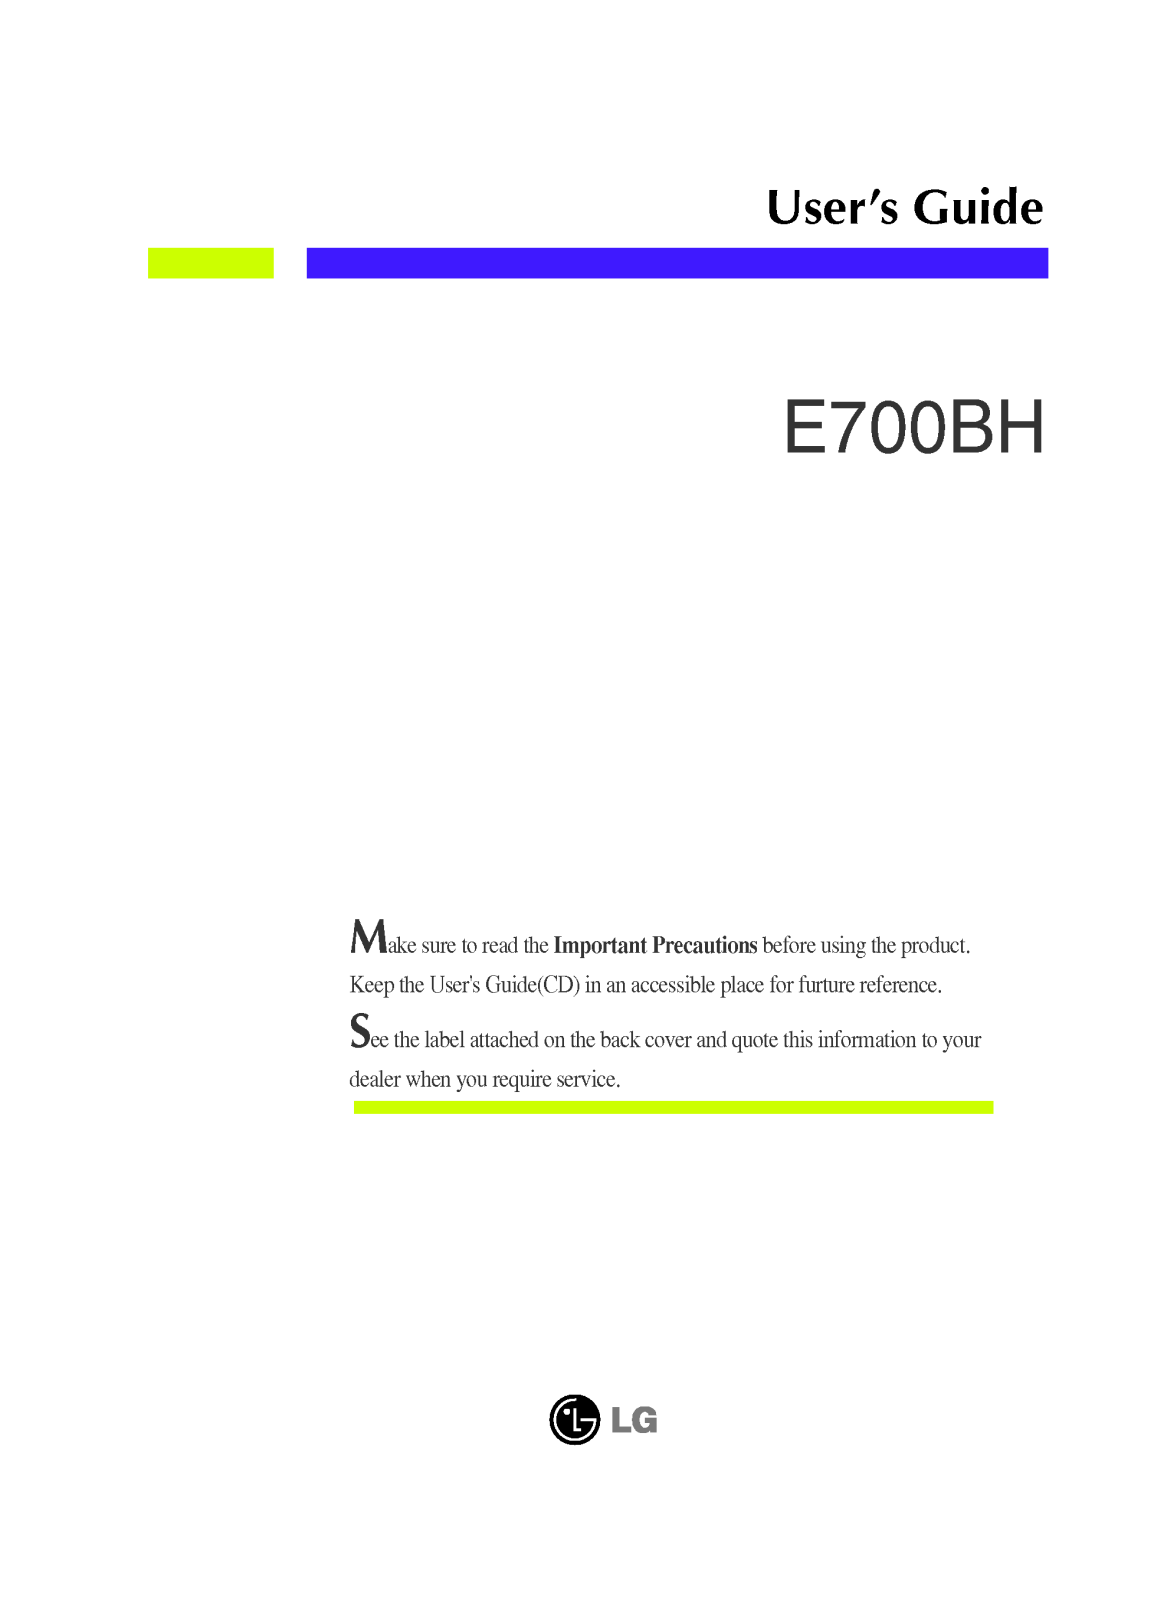 LG E700BH User Manual